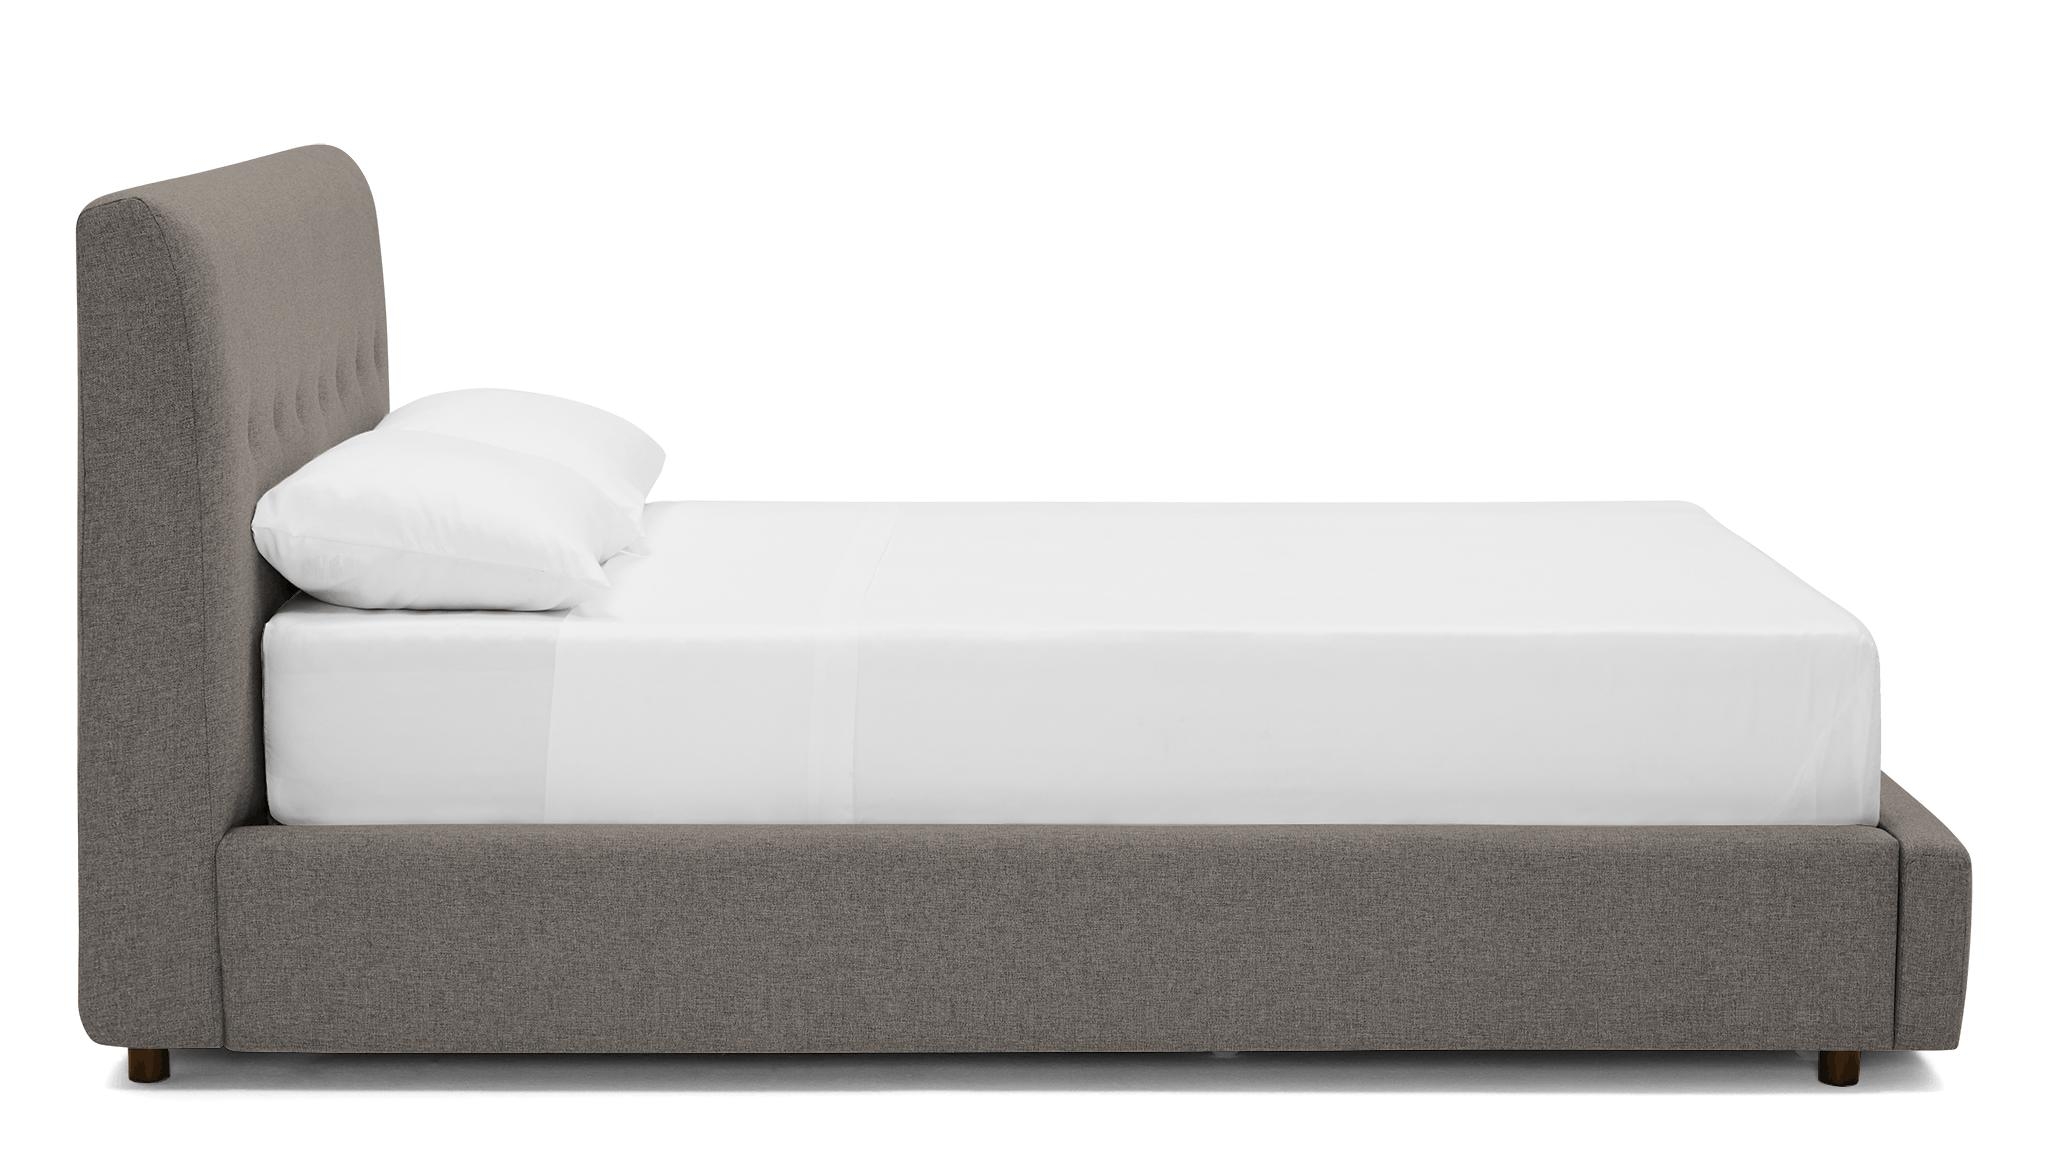 Gray Alvin Mid Century Modern Storage Bed - Cody Slate - Mocha - Cal King - Image 2